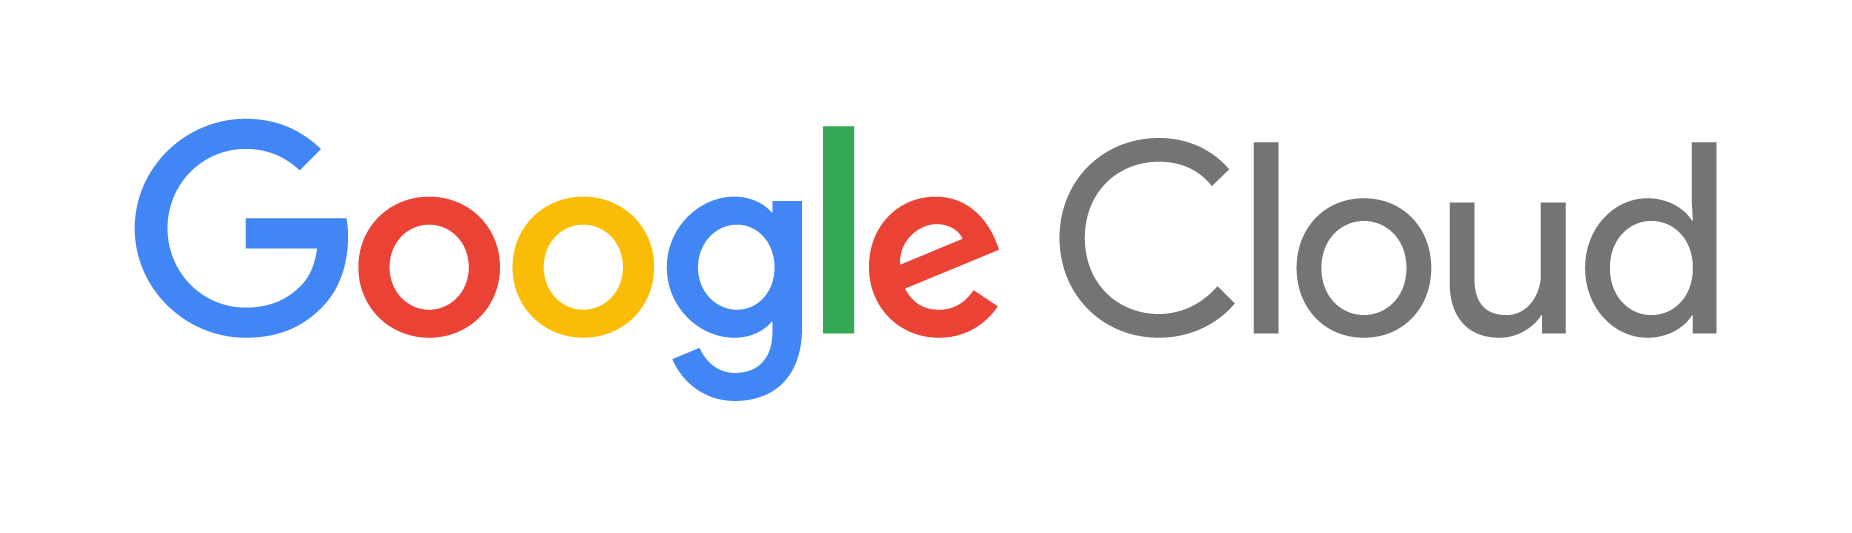 Google Cloud Logo - Google Cloud Platform Customer Case Studies